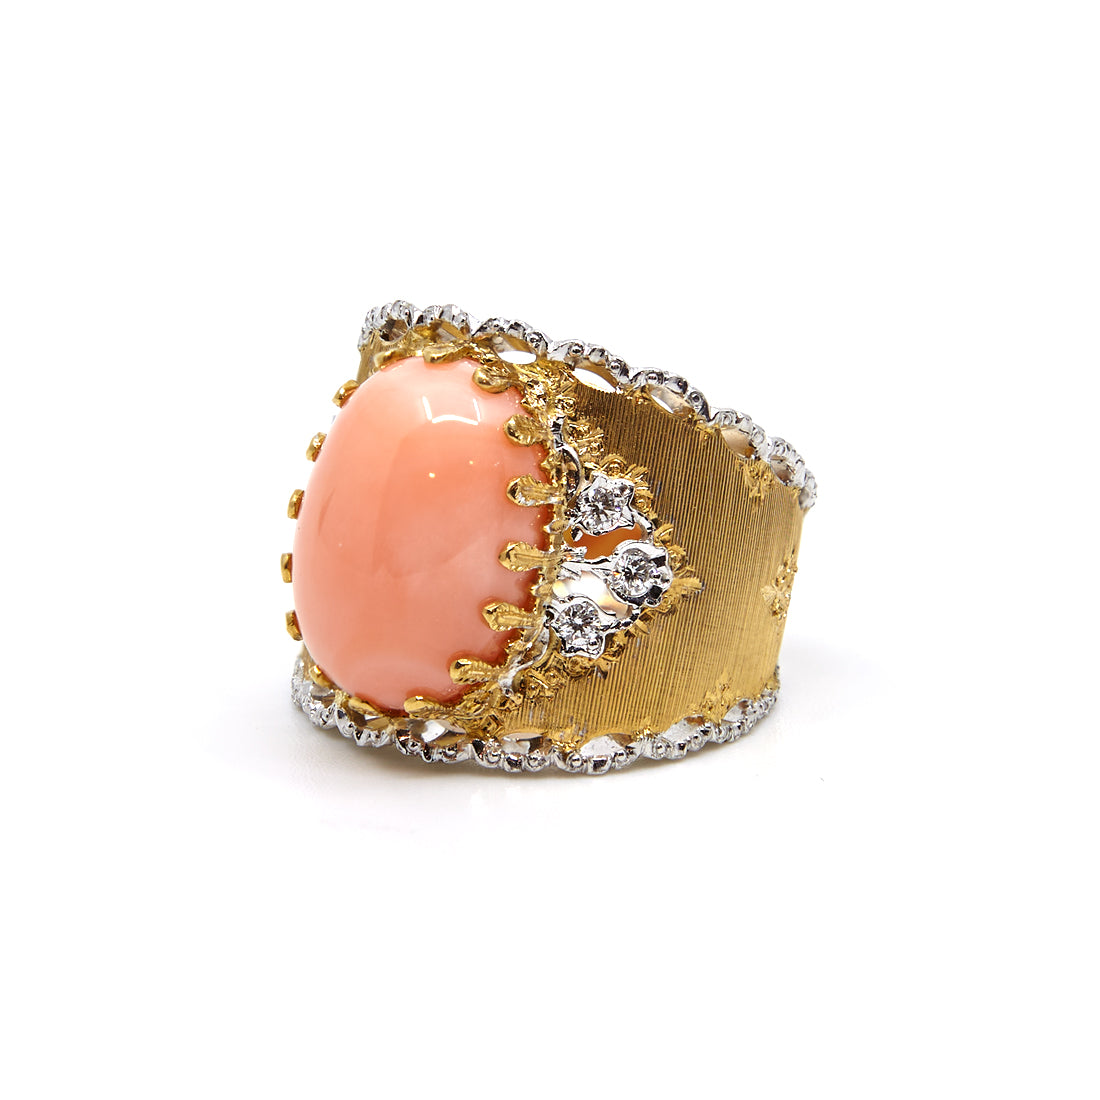 Geel/witgouden ring met koraal en diamant